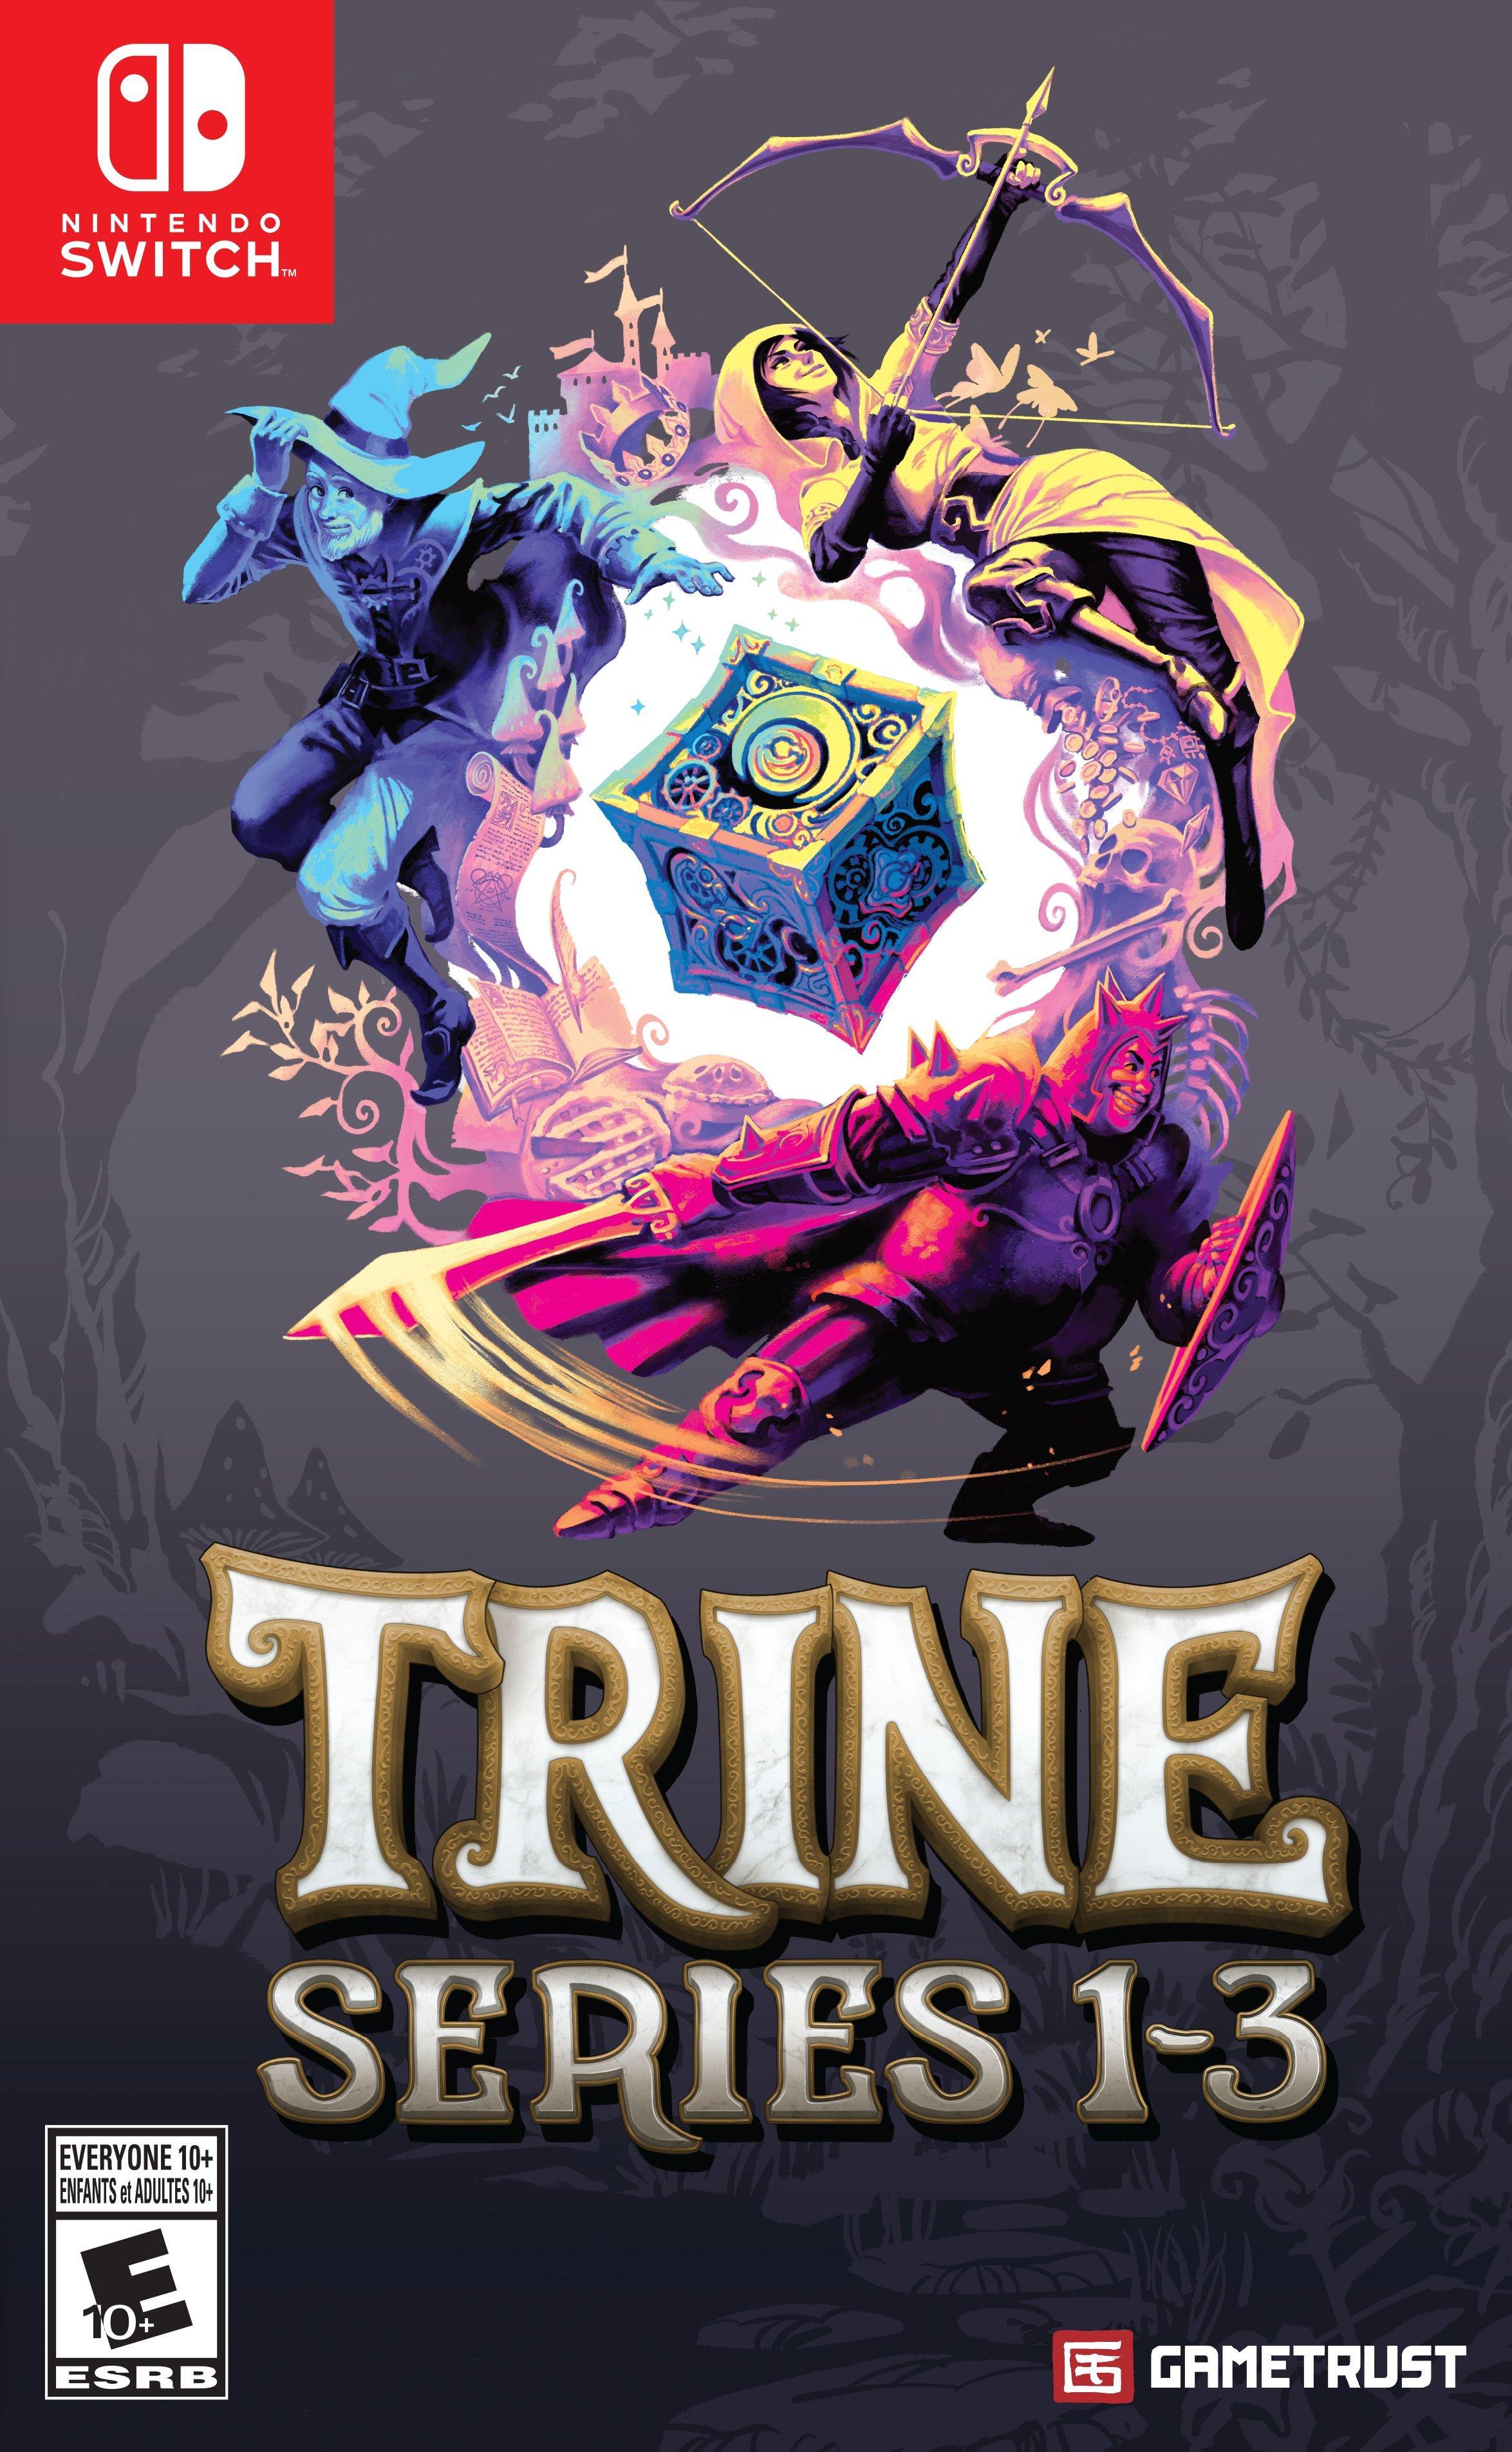 Trine Series 1-3